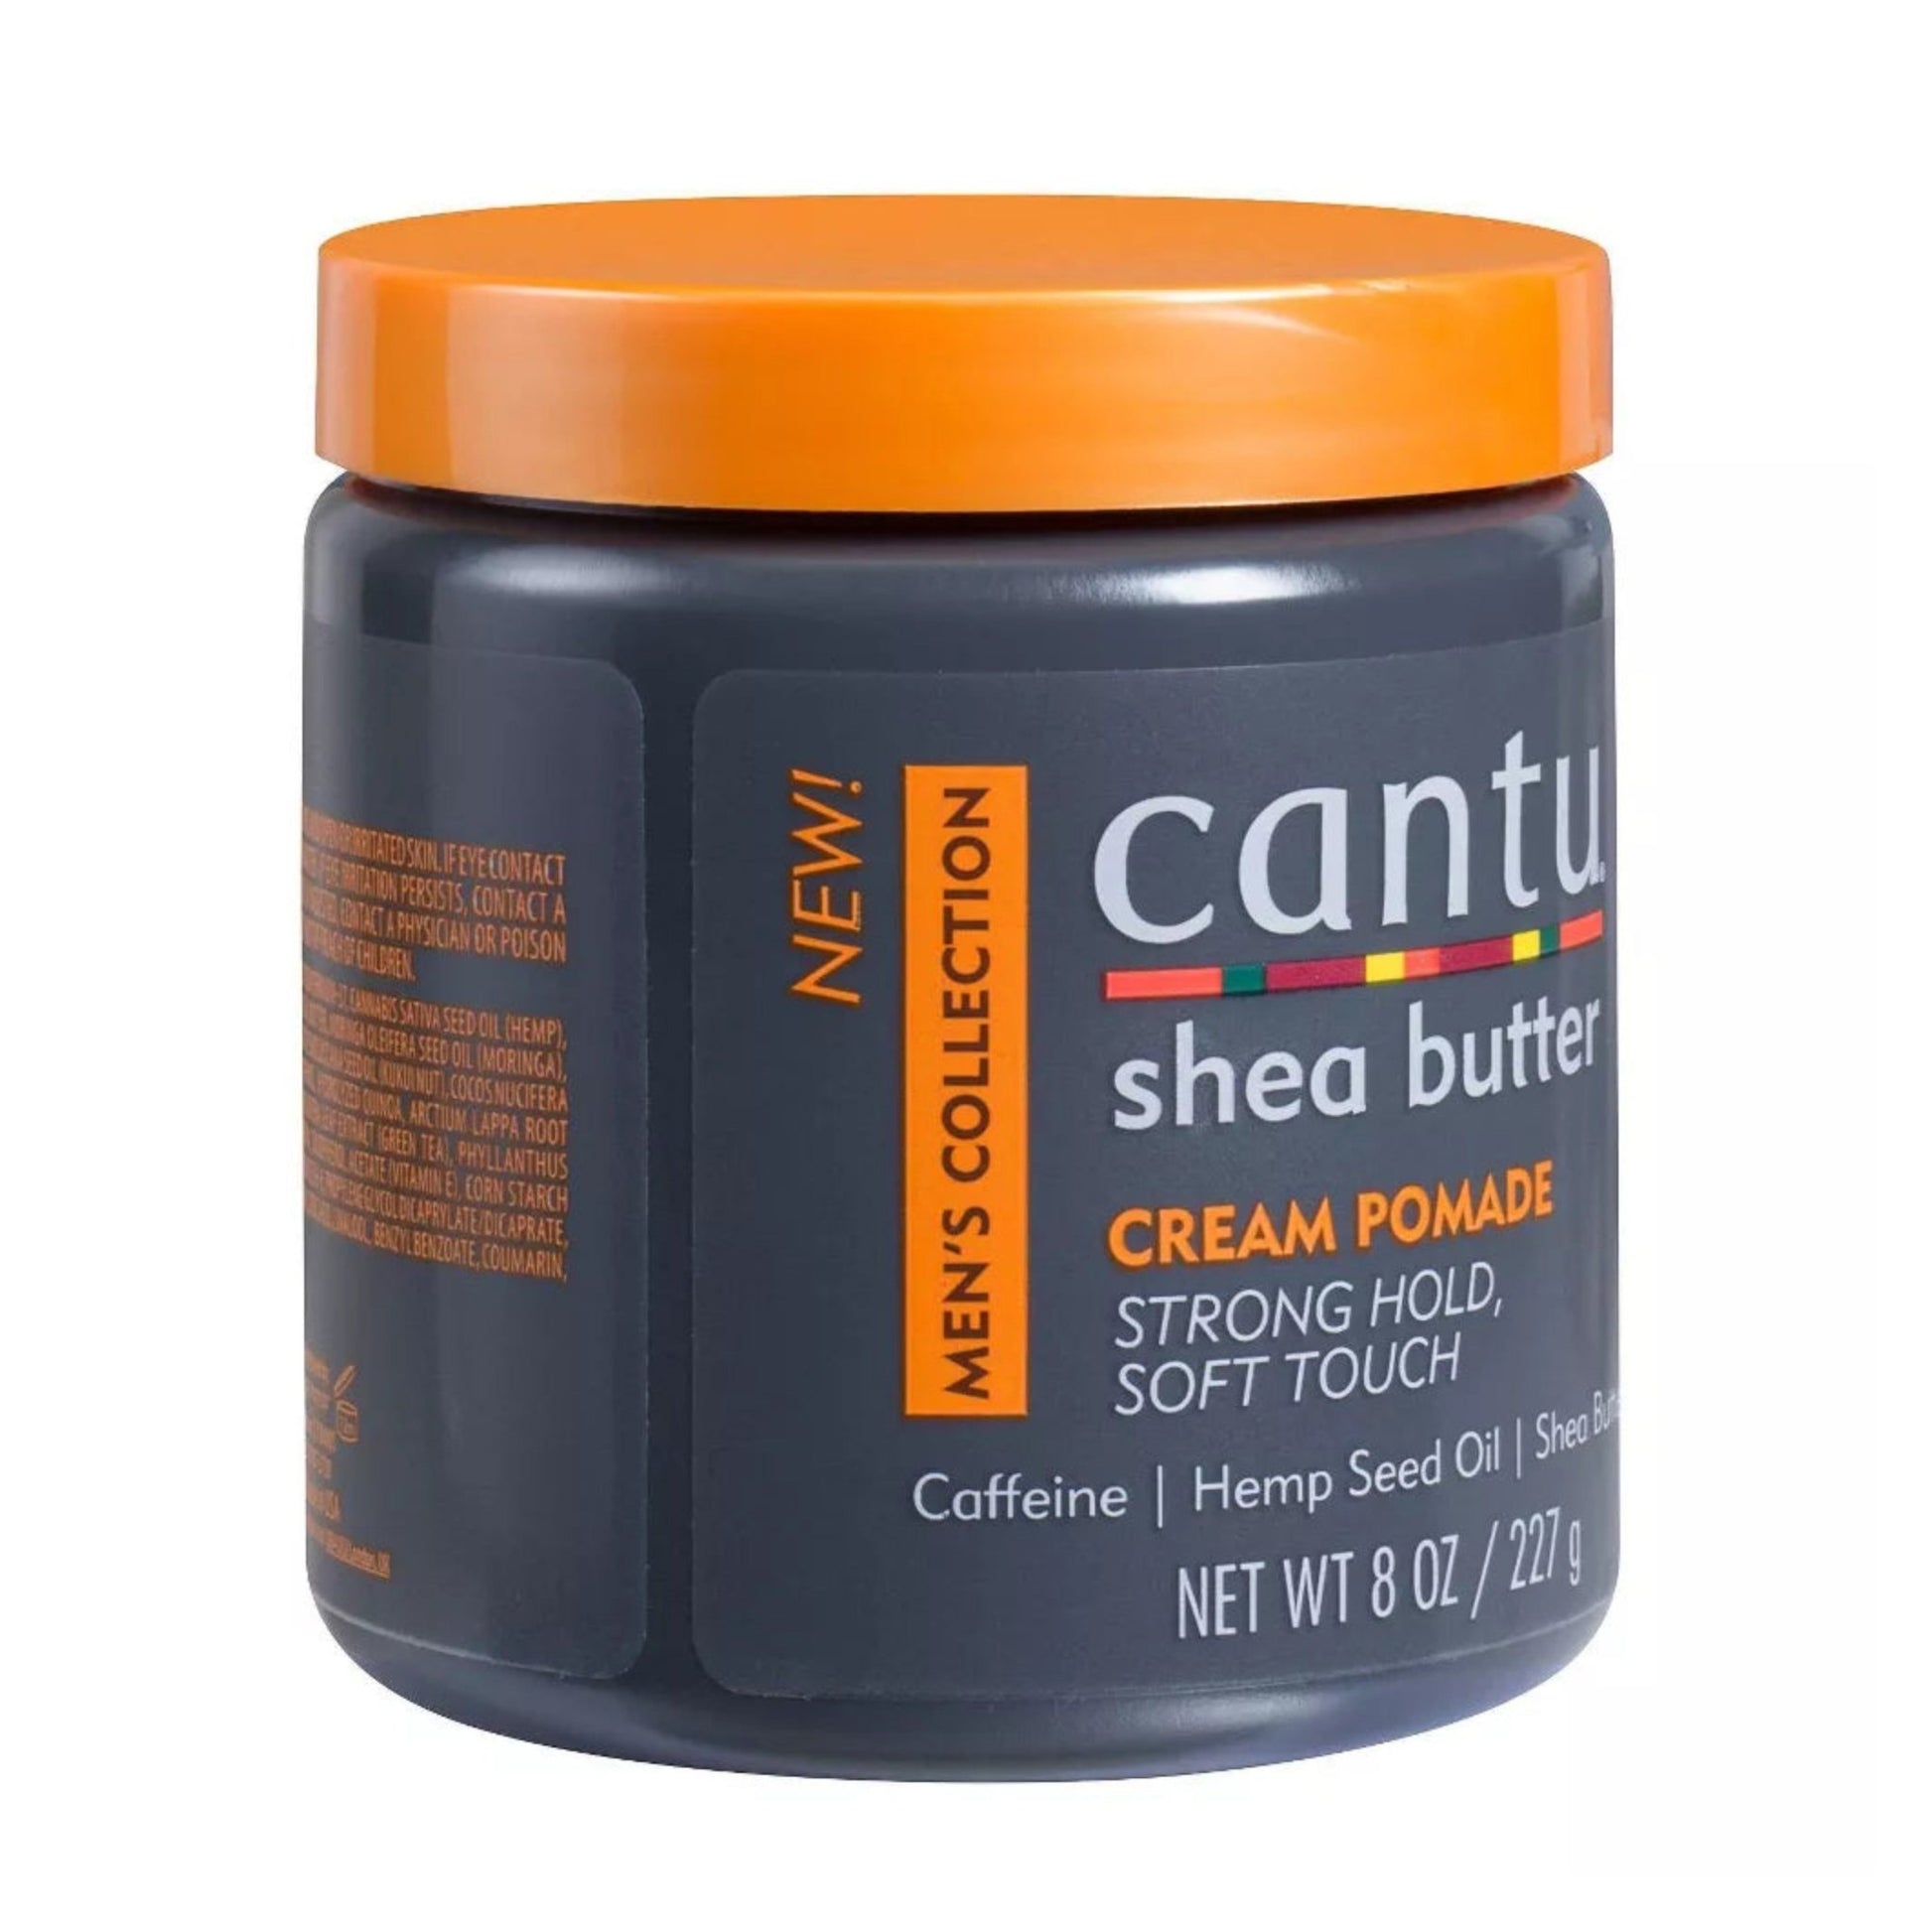 Cantu-Cantu Men's Shea Butter Cream Pomade-227g - Brandat Outlet